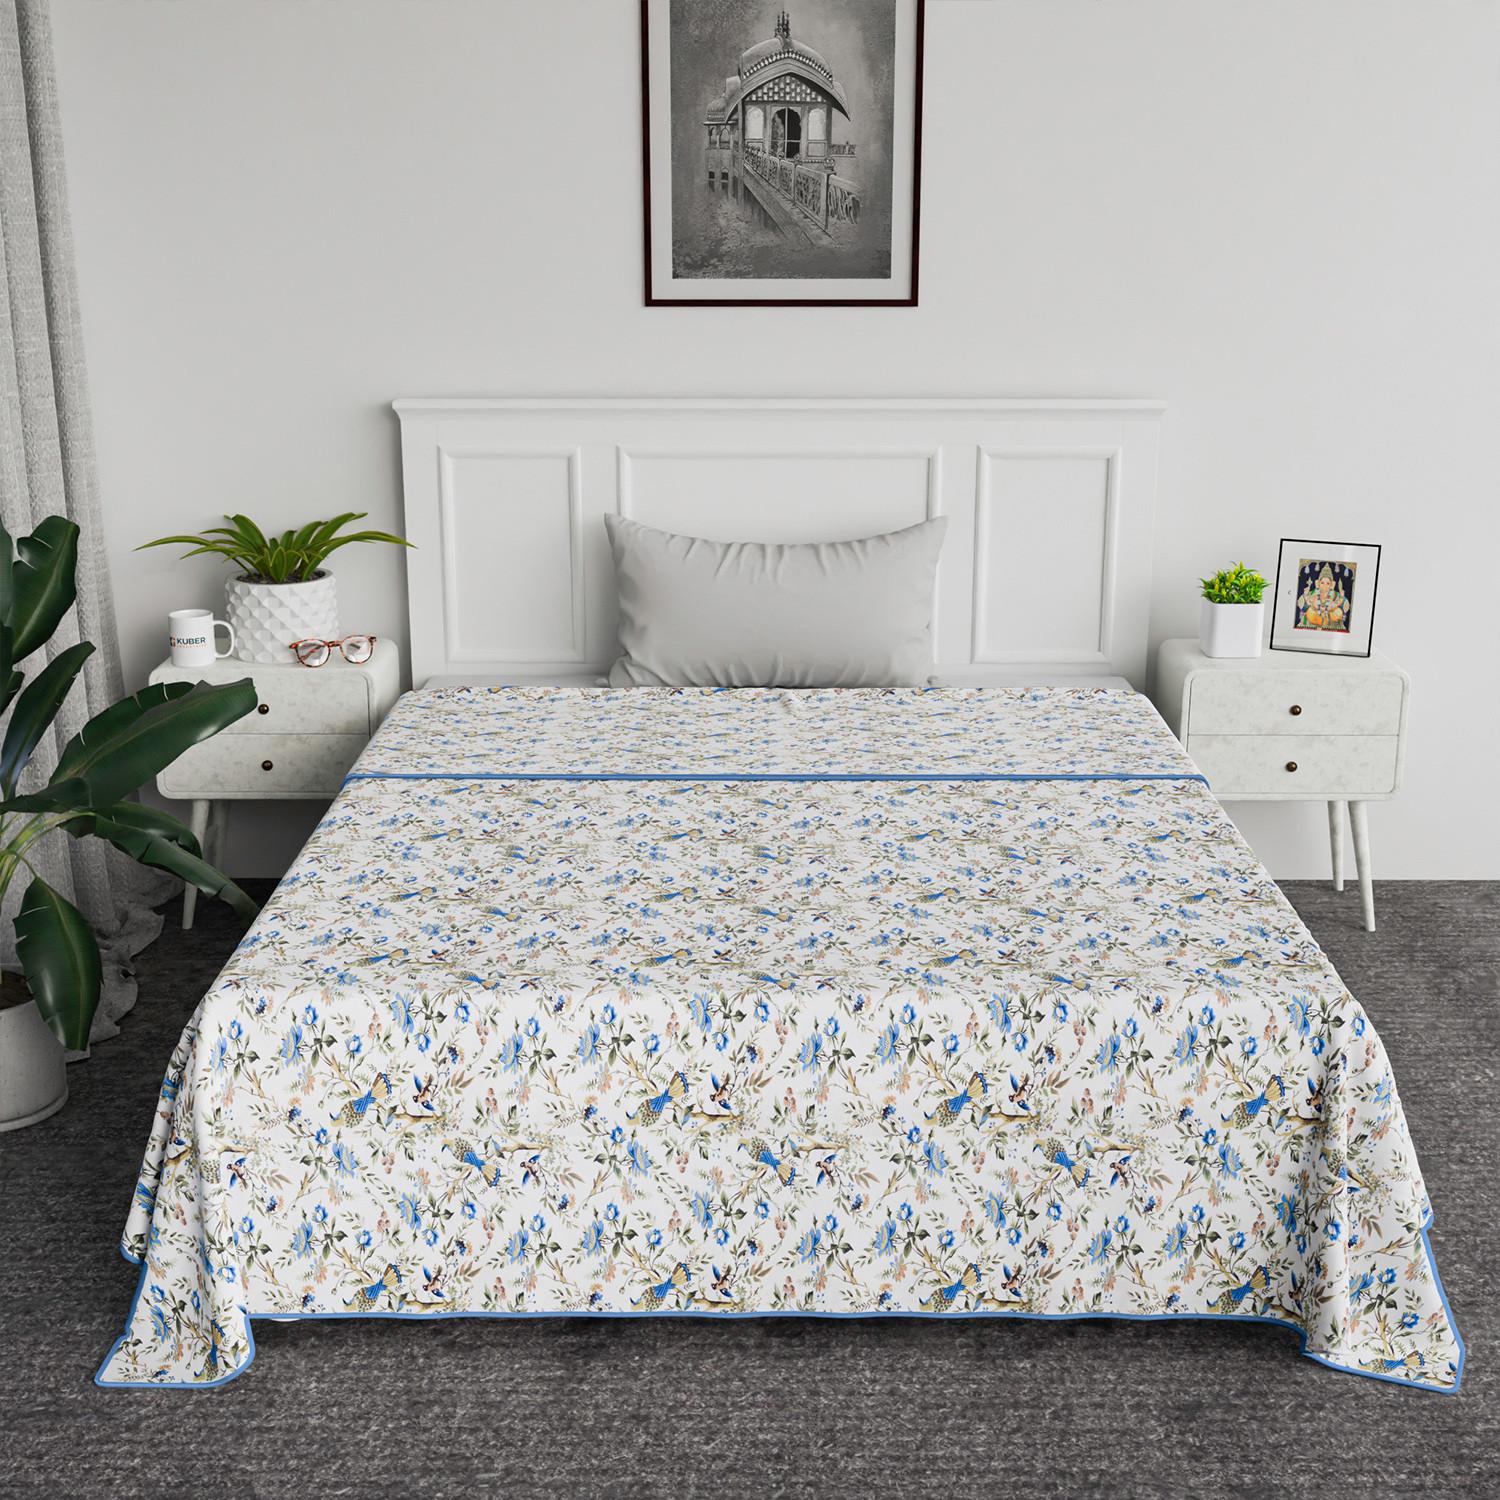 Kuber Industries Blanket | Cotton Single Bed Dohar | Blanket For Home | Reversible AC Blanket For Travelling | Blanket For Summer | Blanket For Winters | Leaf Print | Gray